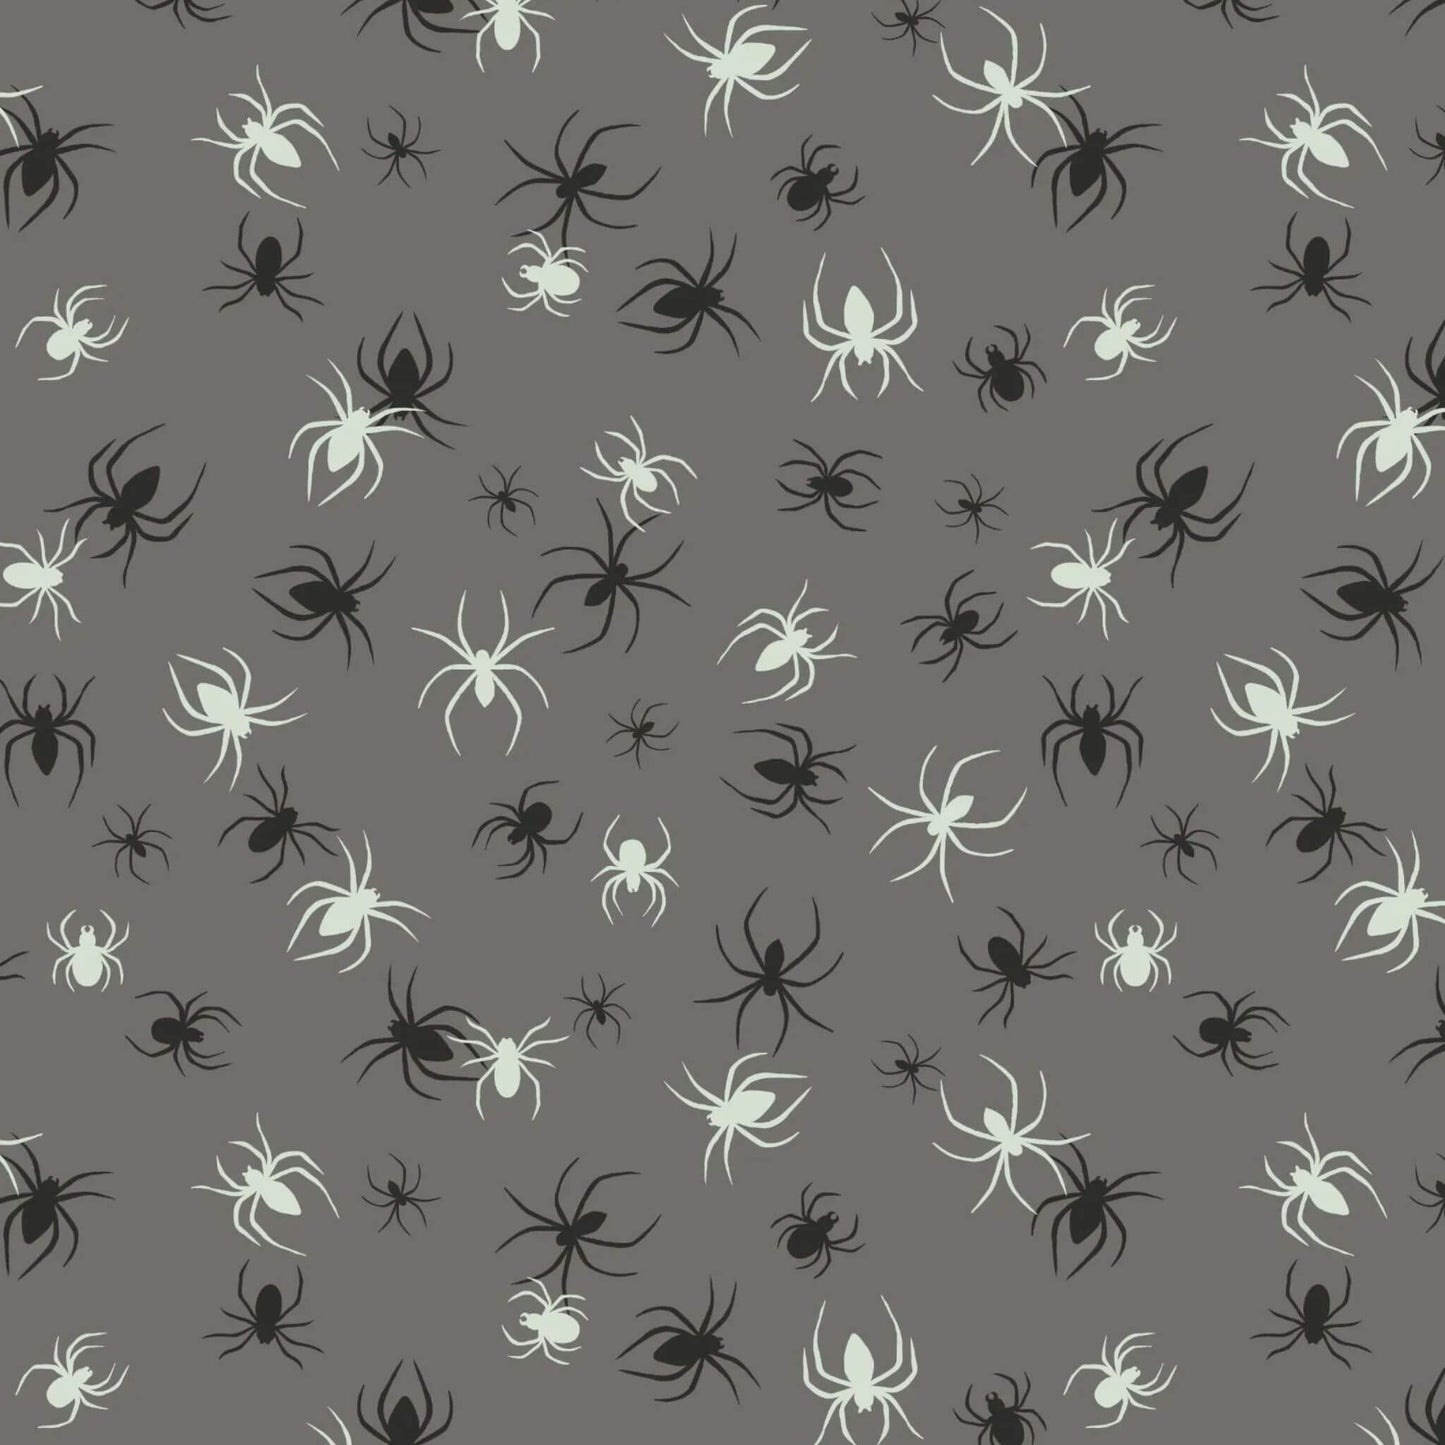 Glow in The Dark Spiders - Haunted House Halloween Fabric Range - Lewis and Irene - Grey